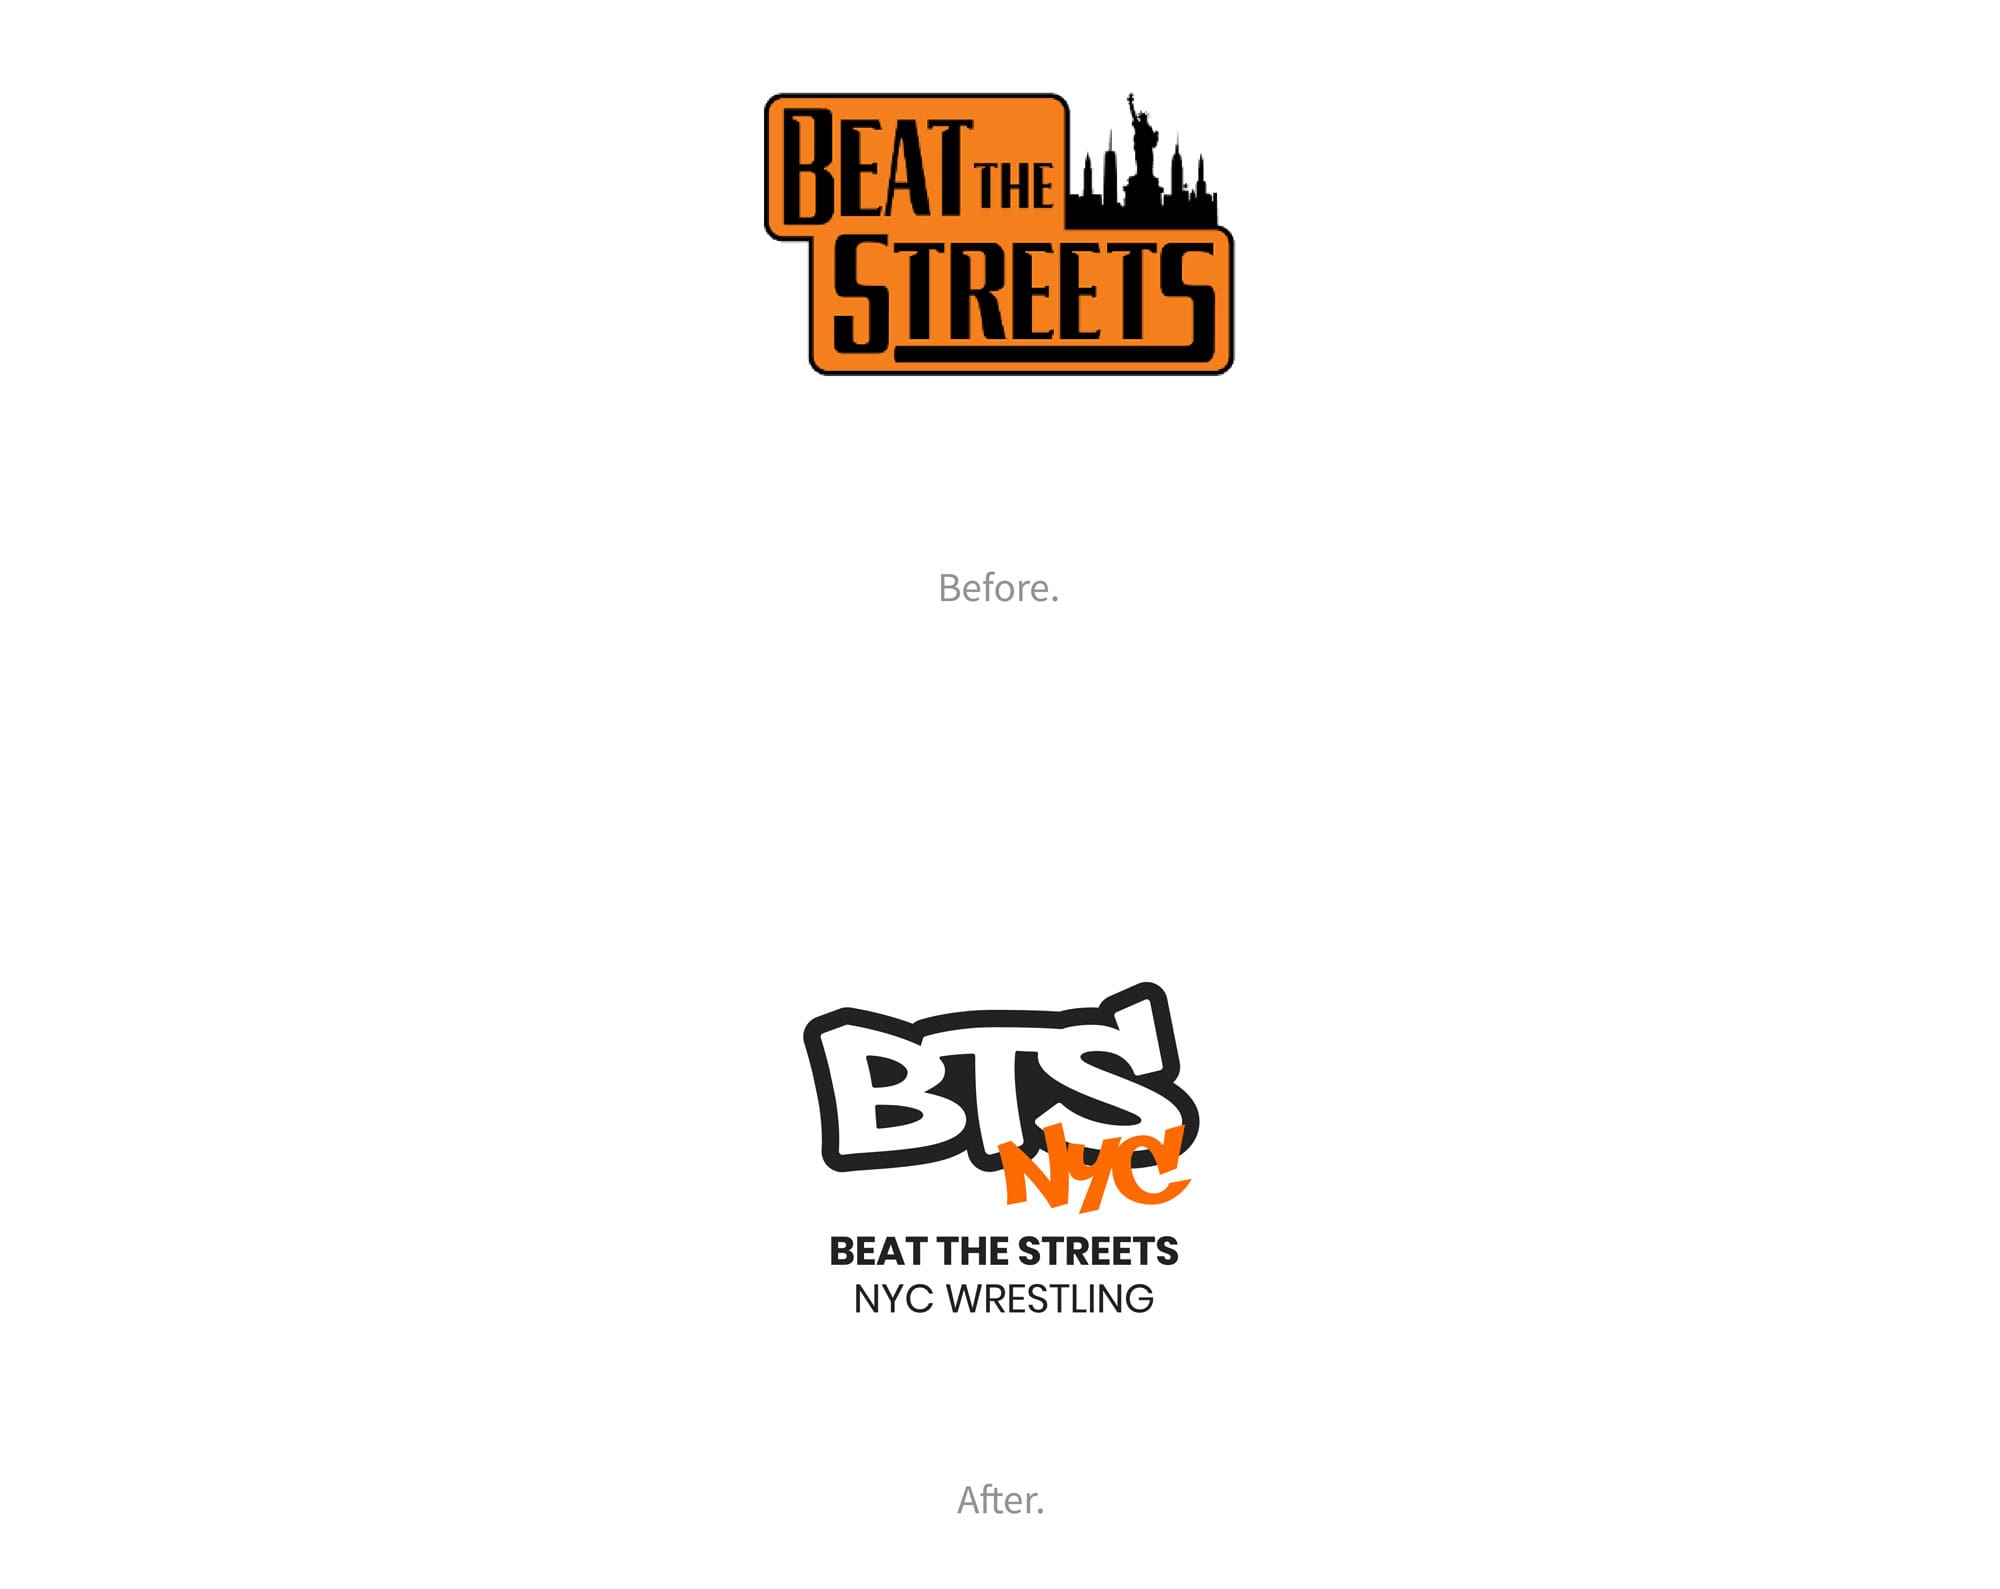 Beat the streets logos